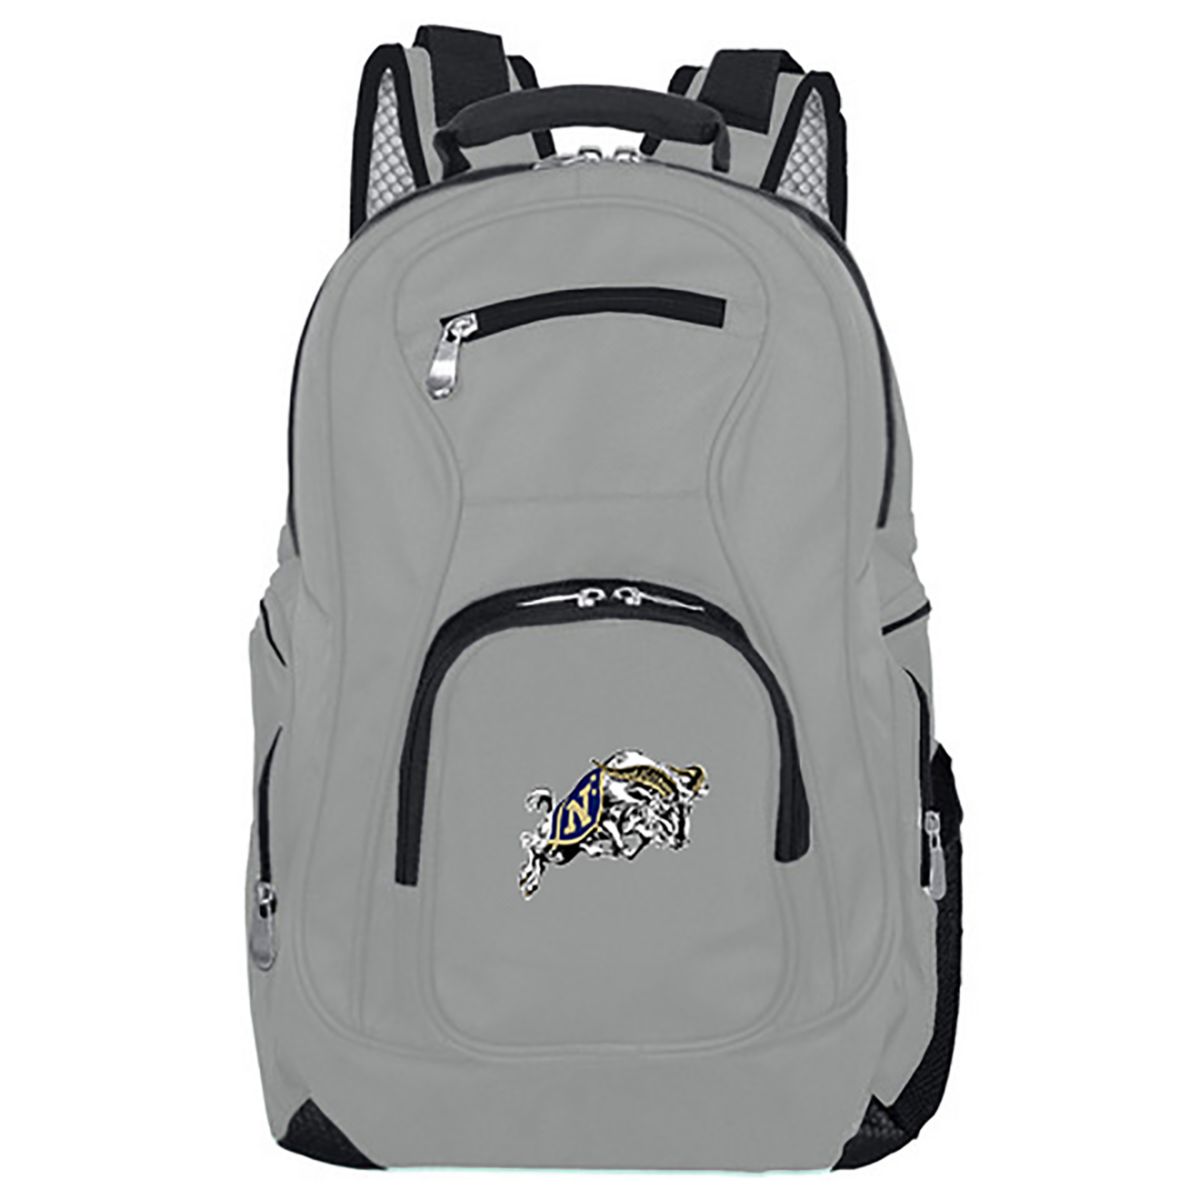 Рюкзак для гардемаринов Mojo Navy NCAA